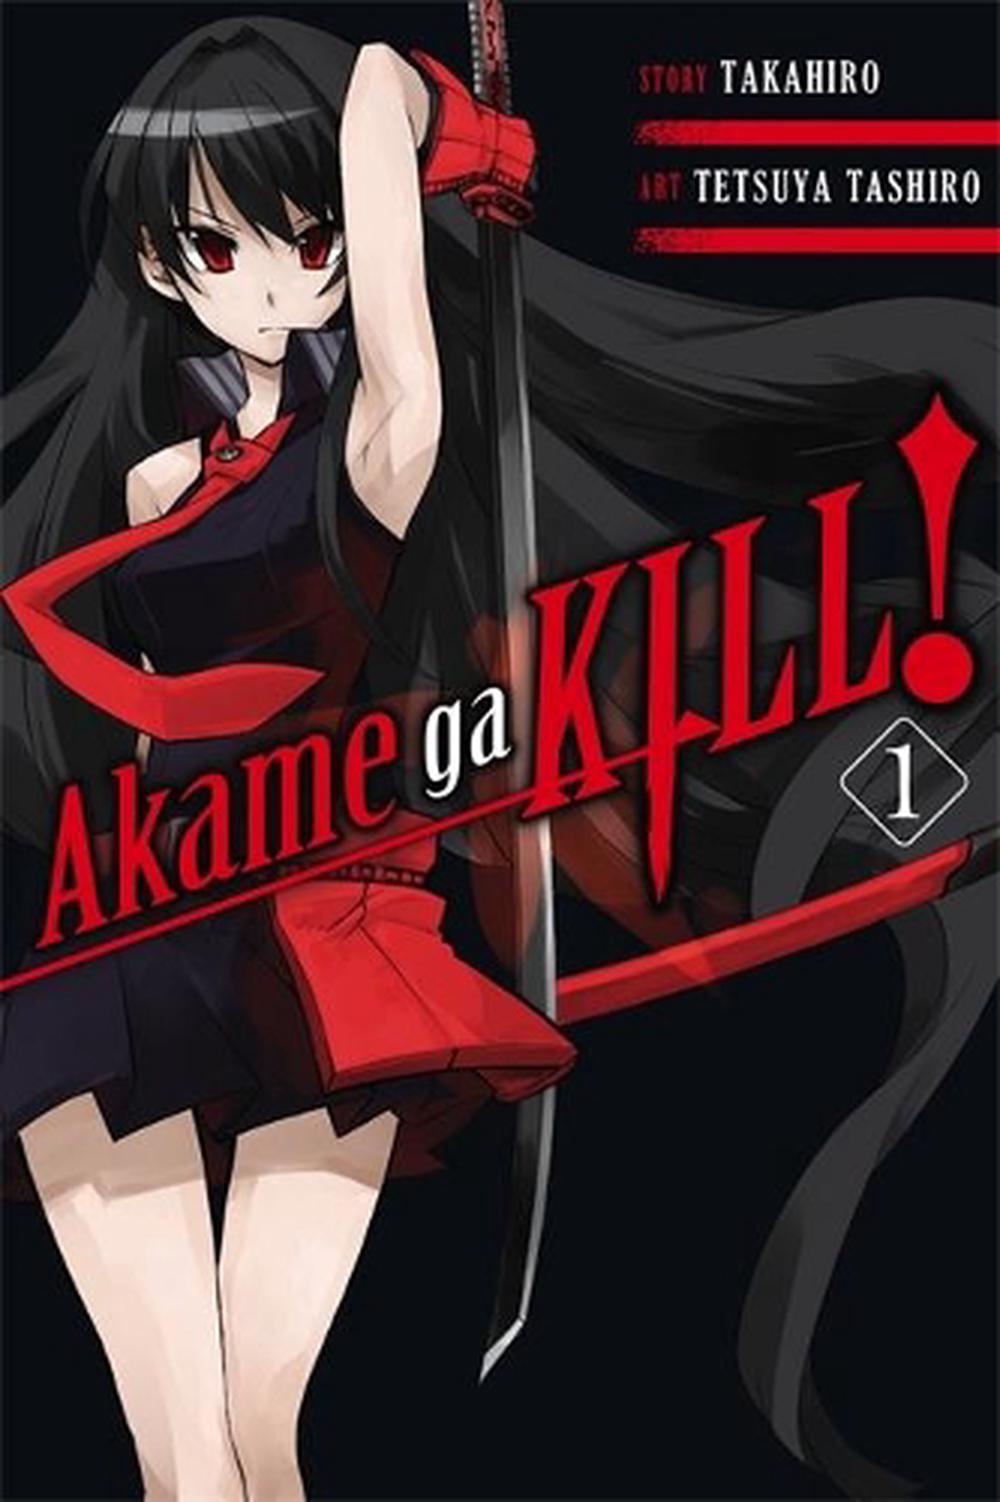 Akame Ga Kill By Takahiro English Paperback Book Free Shipping 3240